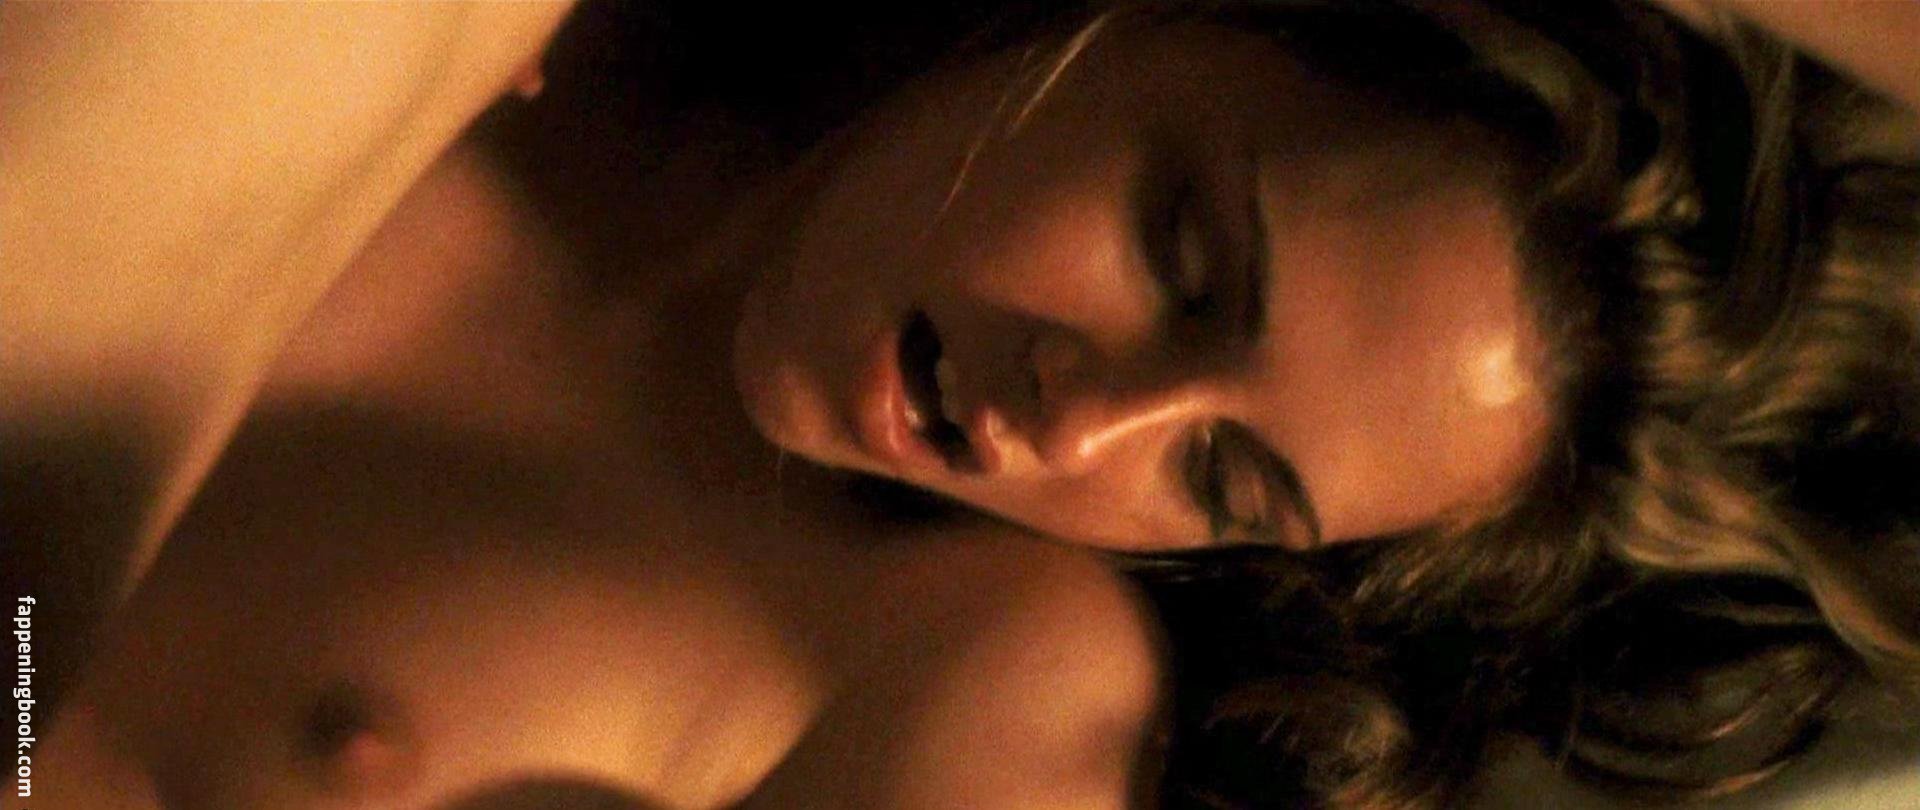 Kristen Stewart Nude, The Fappening - Photo #317518 - FappeningBook.